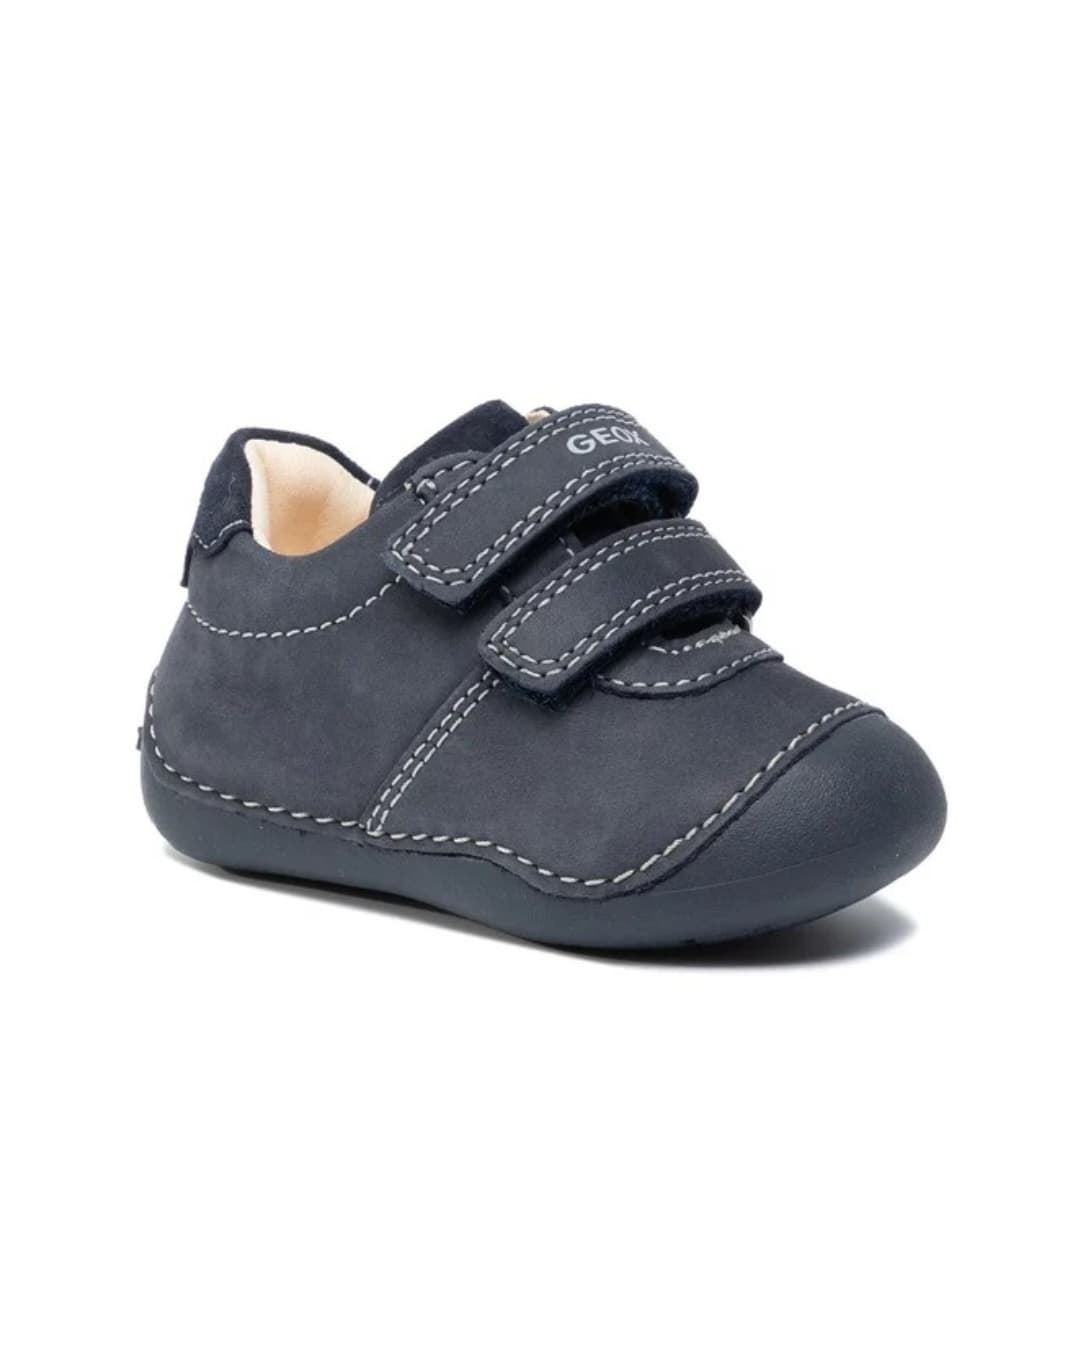 Geox Tutim Baby Respectful Shoe Navy Blue - Image 1